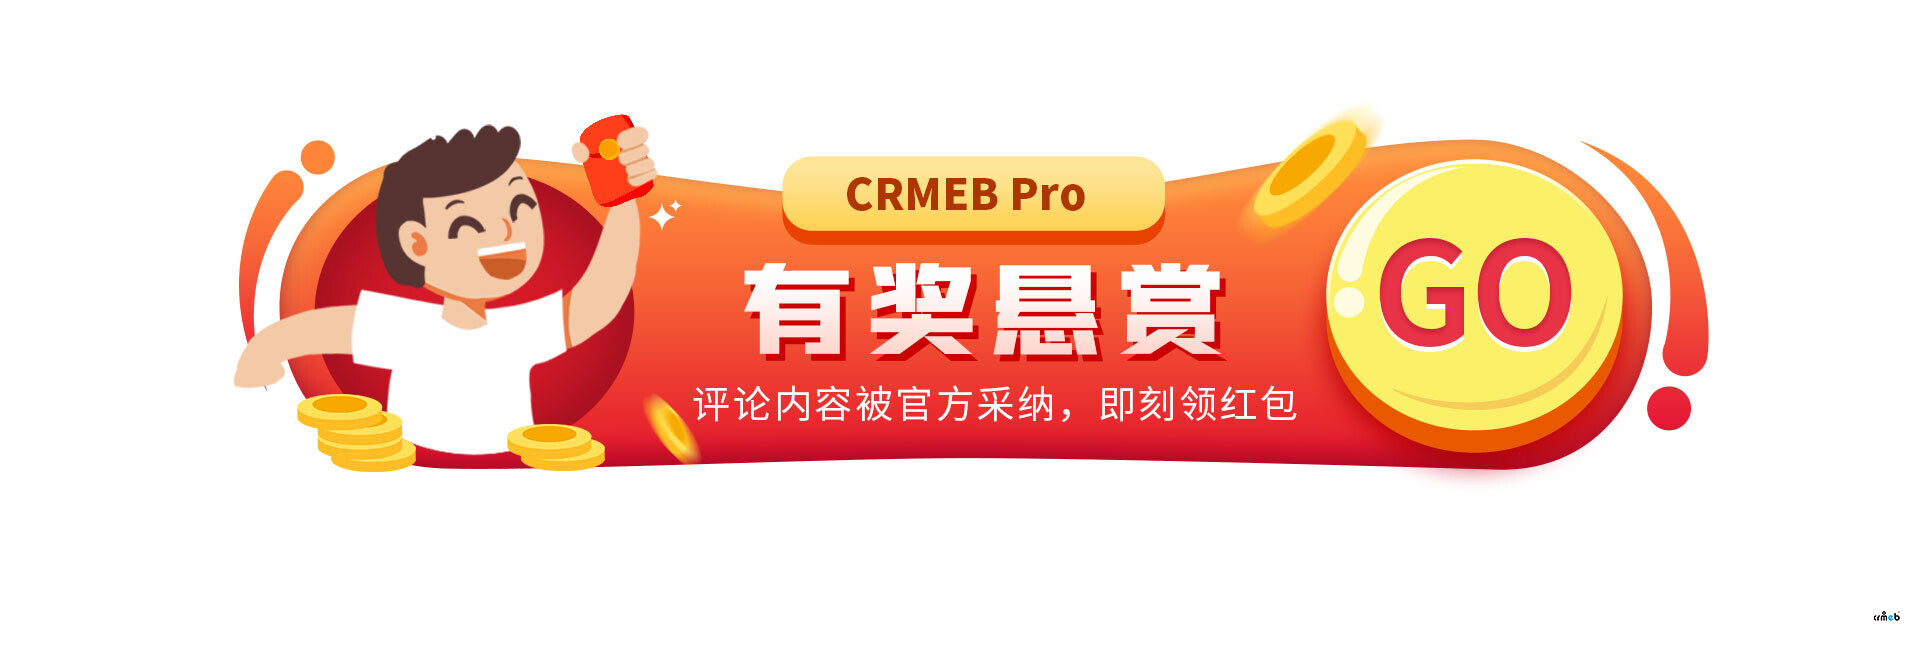 CRMEB Pro v2.1公测版 发布啦！【有奖悬赏贴】